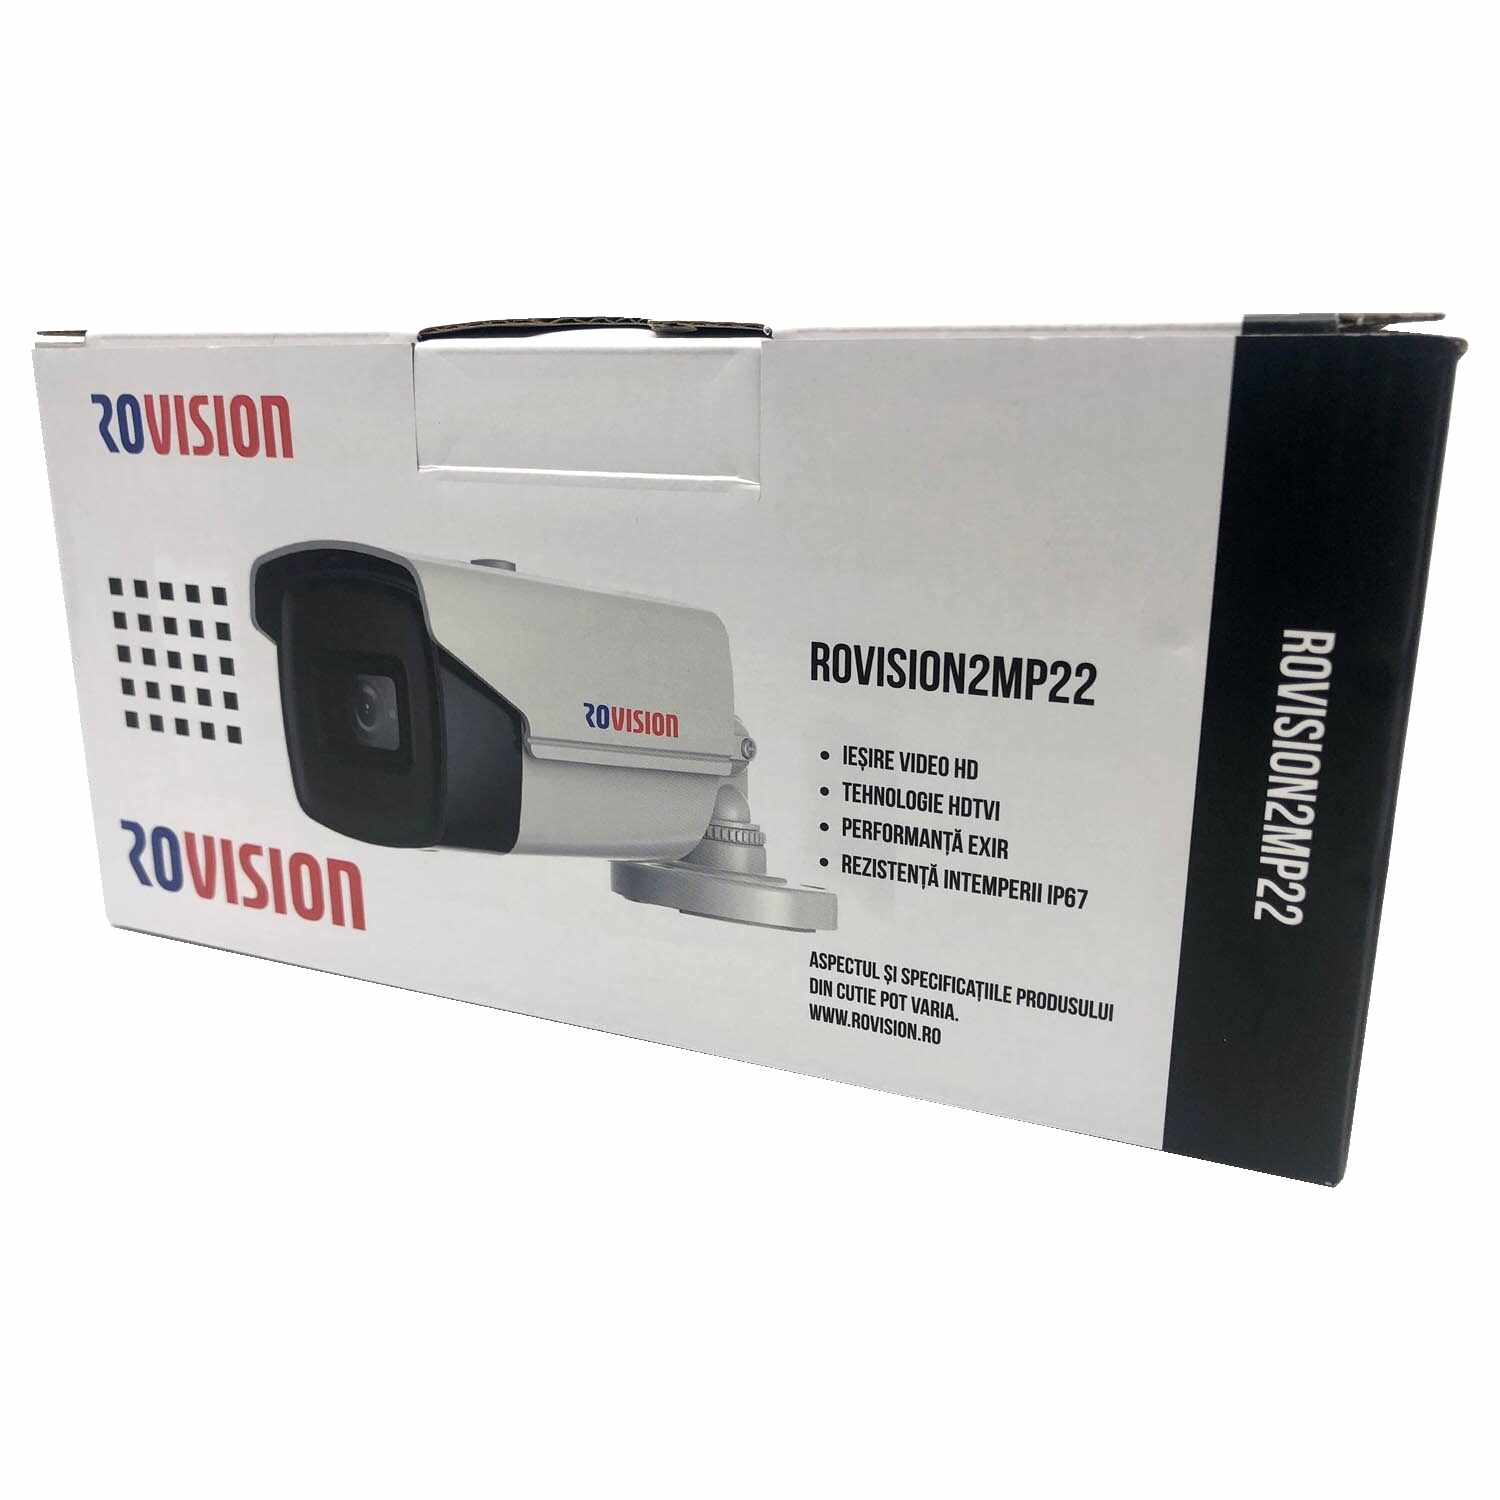 Sistem de supraveghere video 8 camere Rovision oem Hikvision full hd, 2MP, IR40m, DVR 8 canale 1080P lite, accesorii